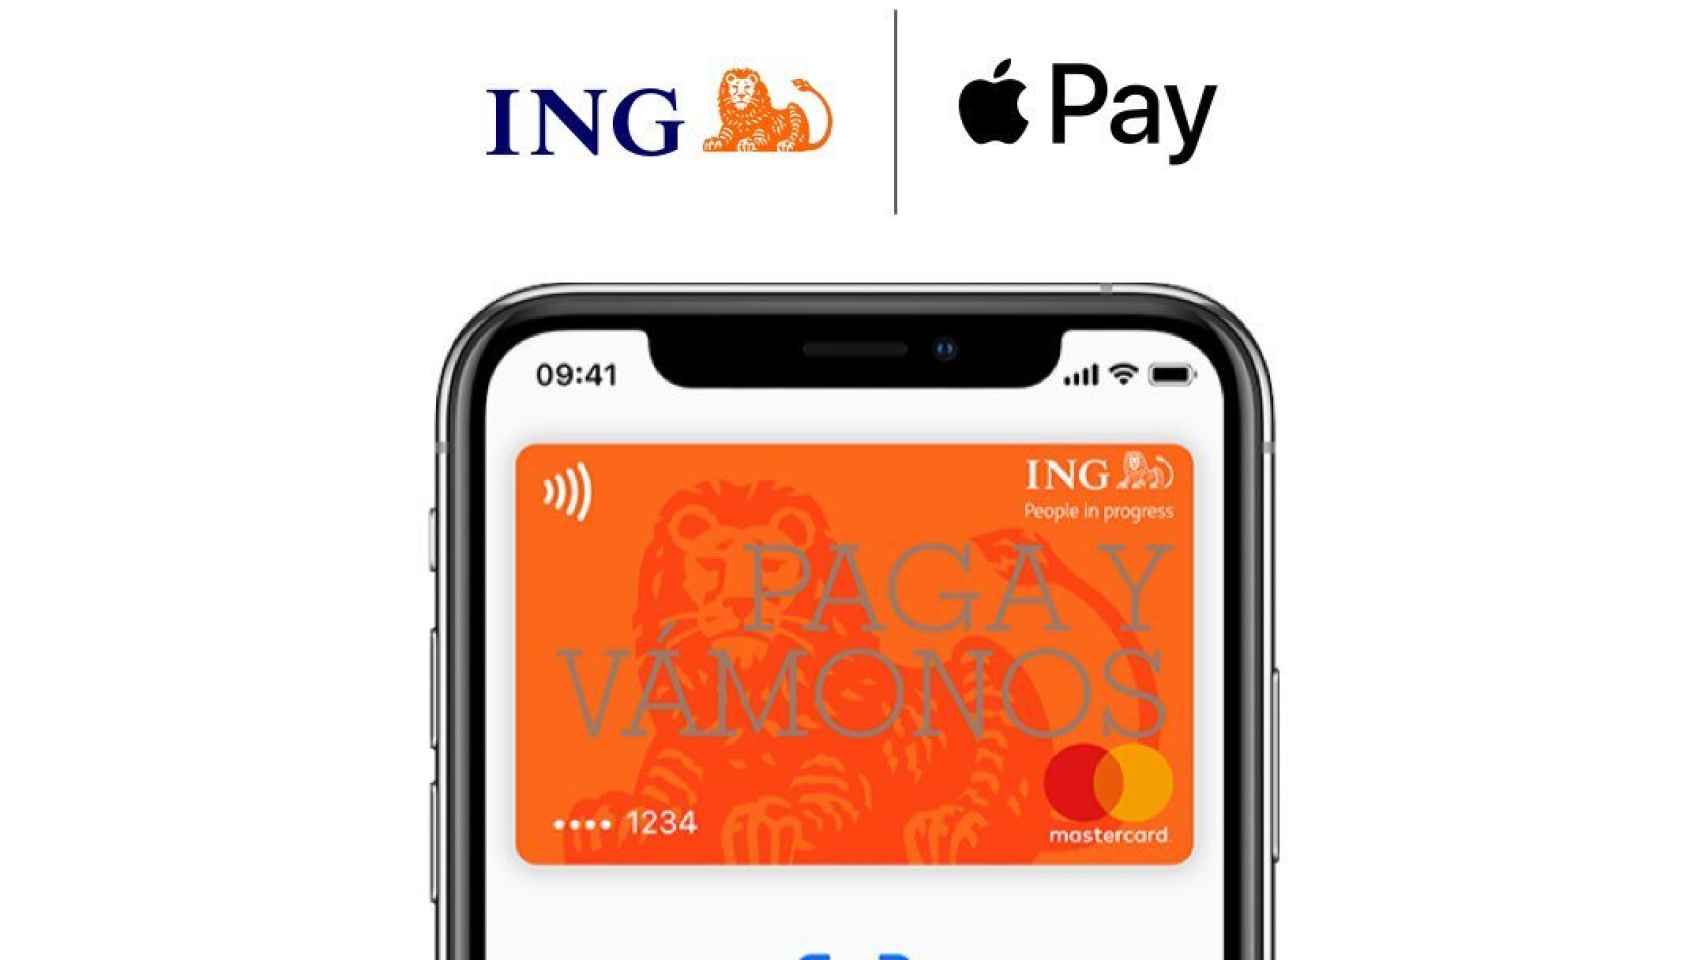 Apple Pay llega a ING Direct España: ya se puede pagar con este sistema